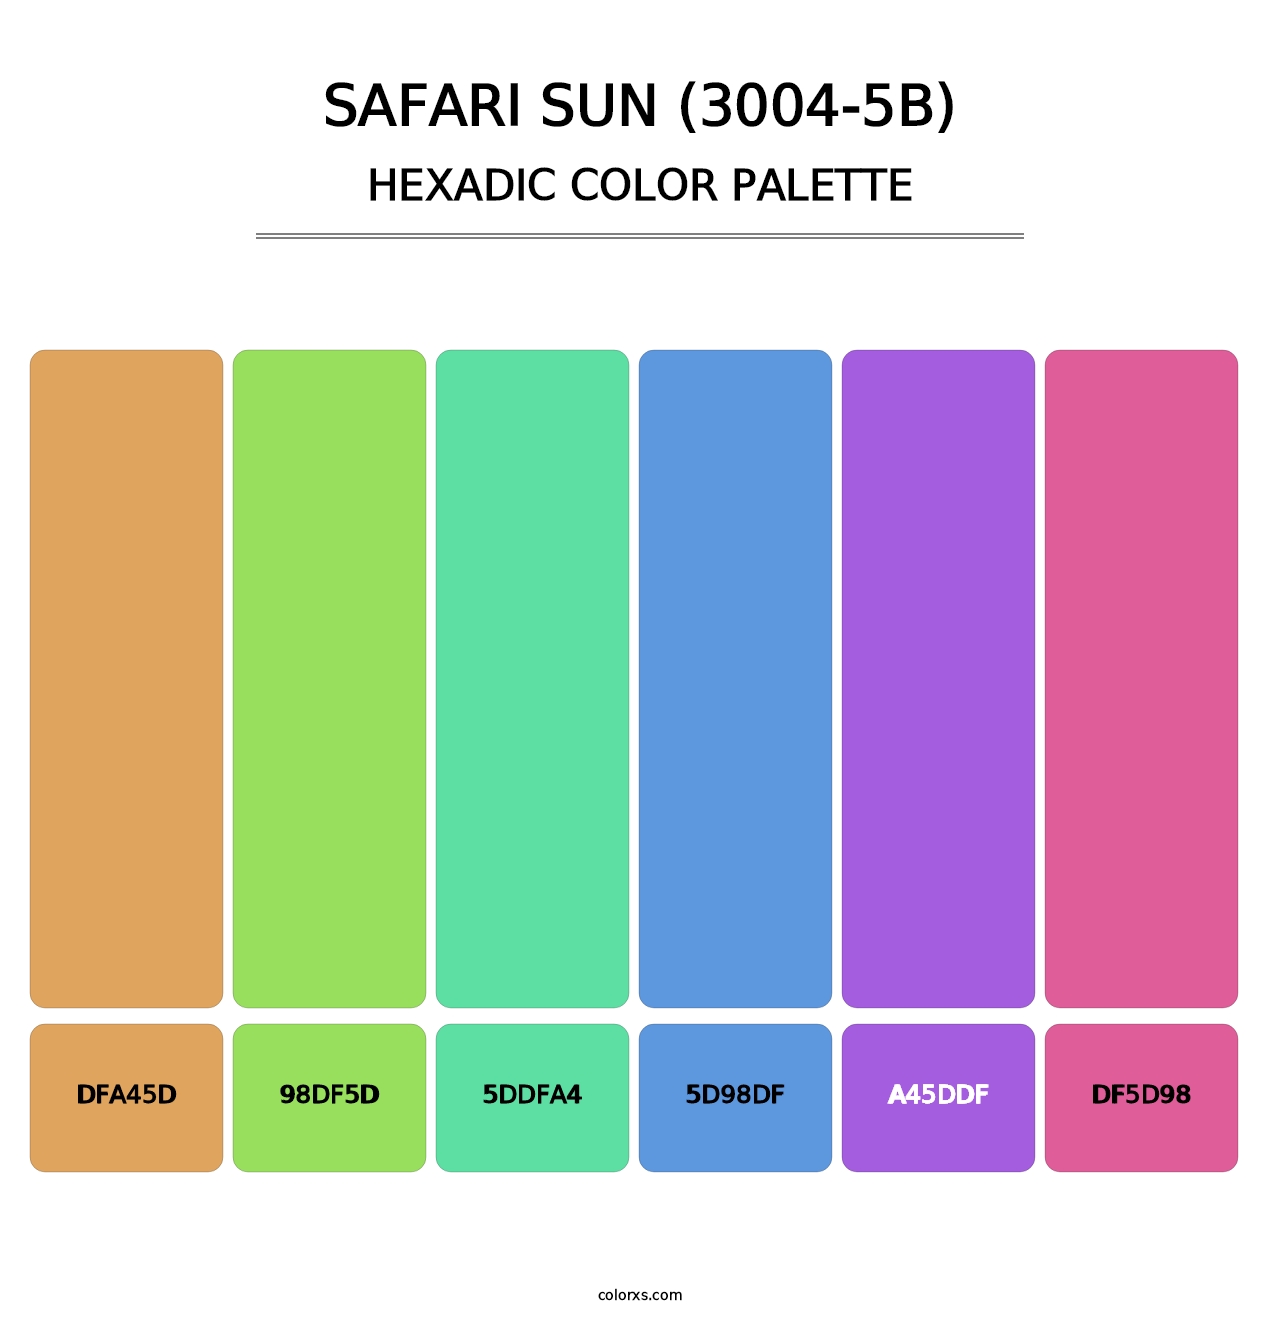 Safari Sun (3004-5B) - Hexadic Color Palette